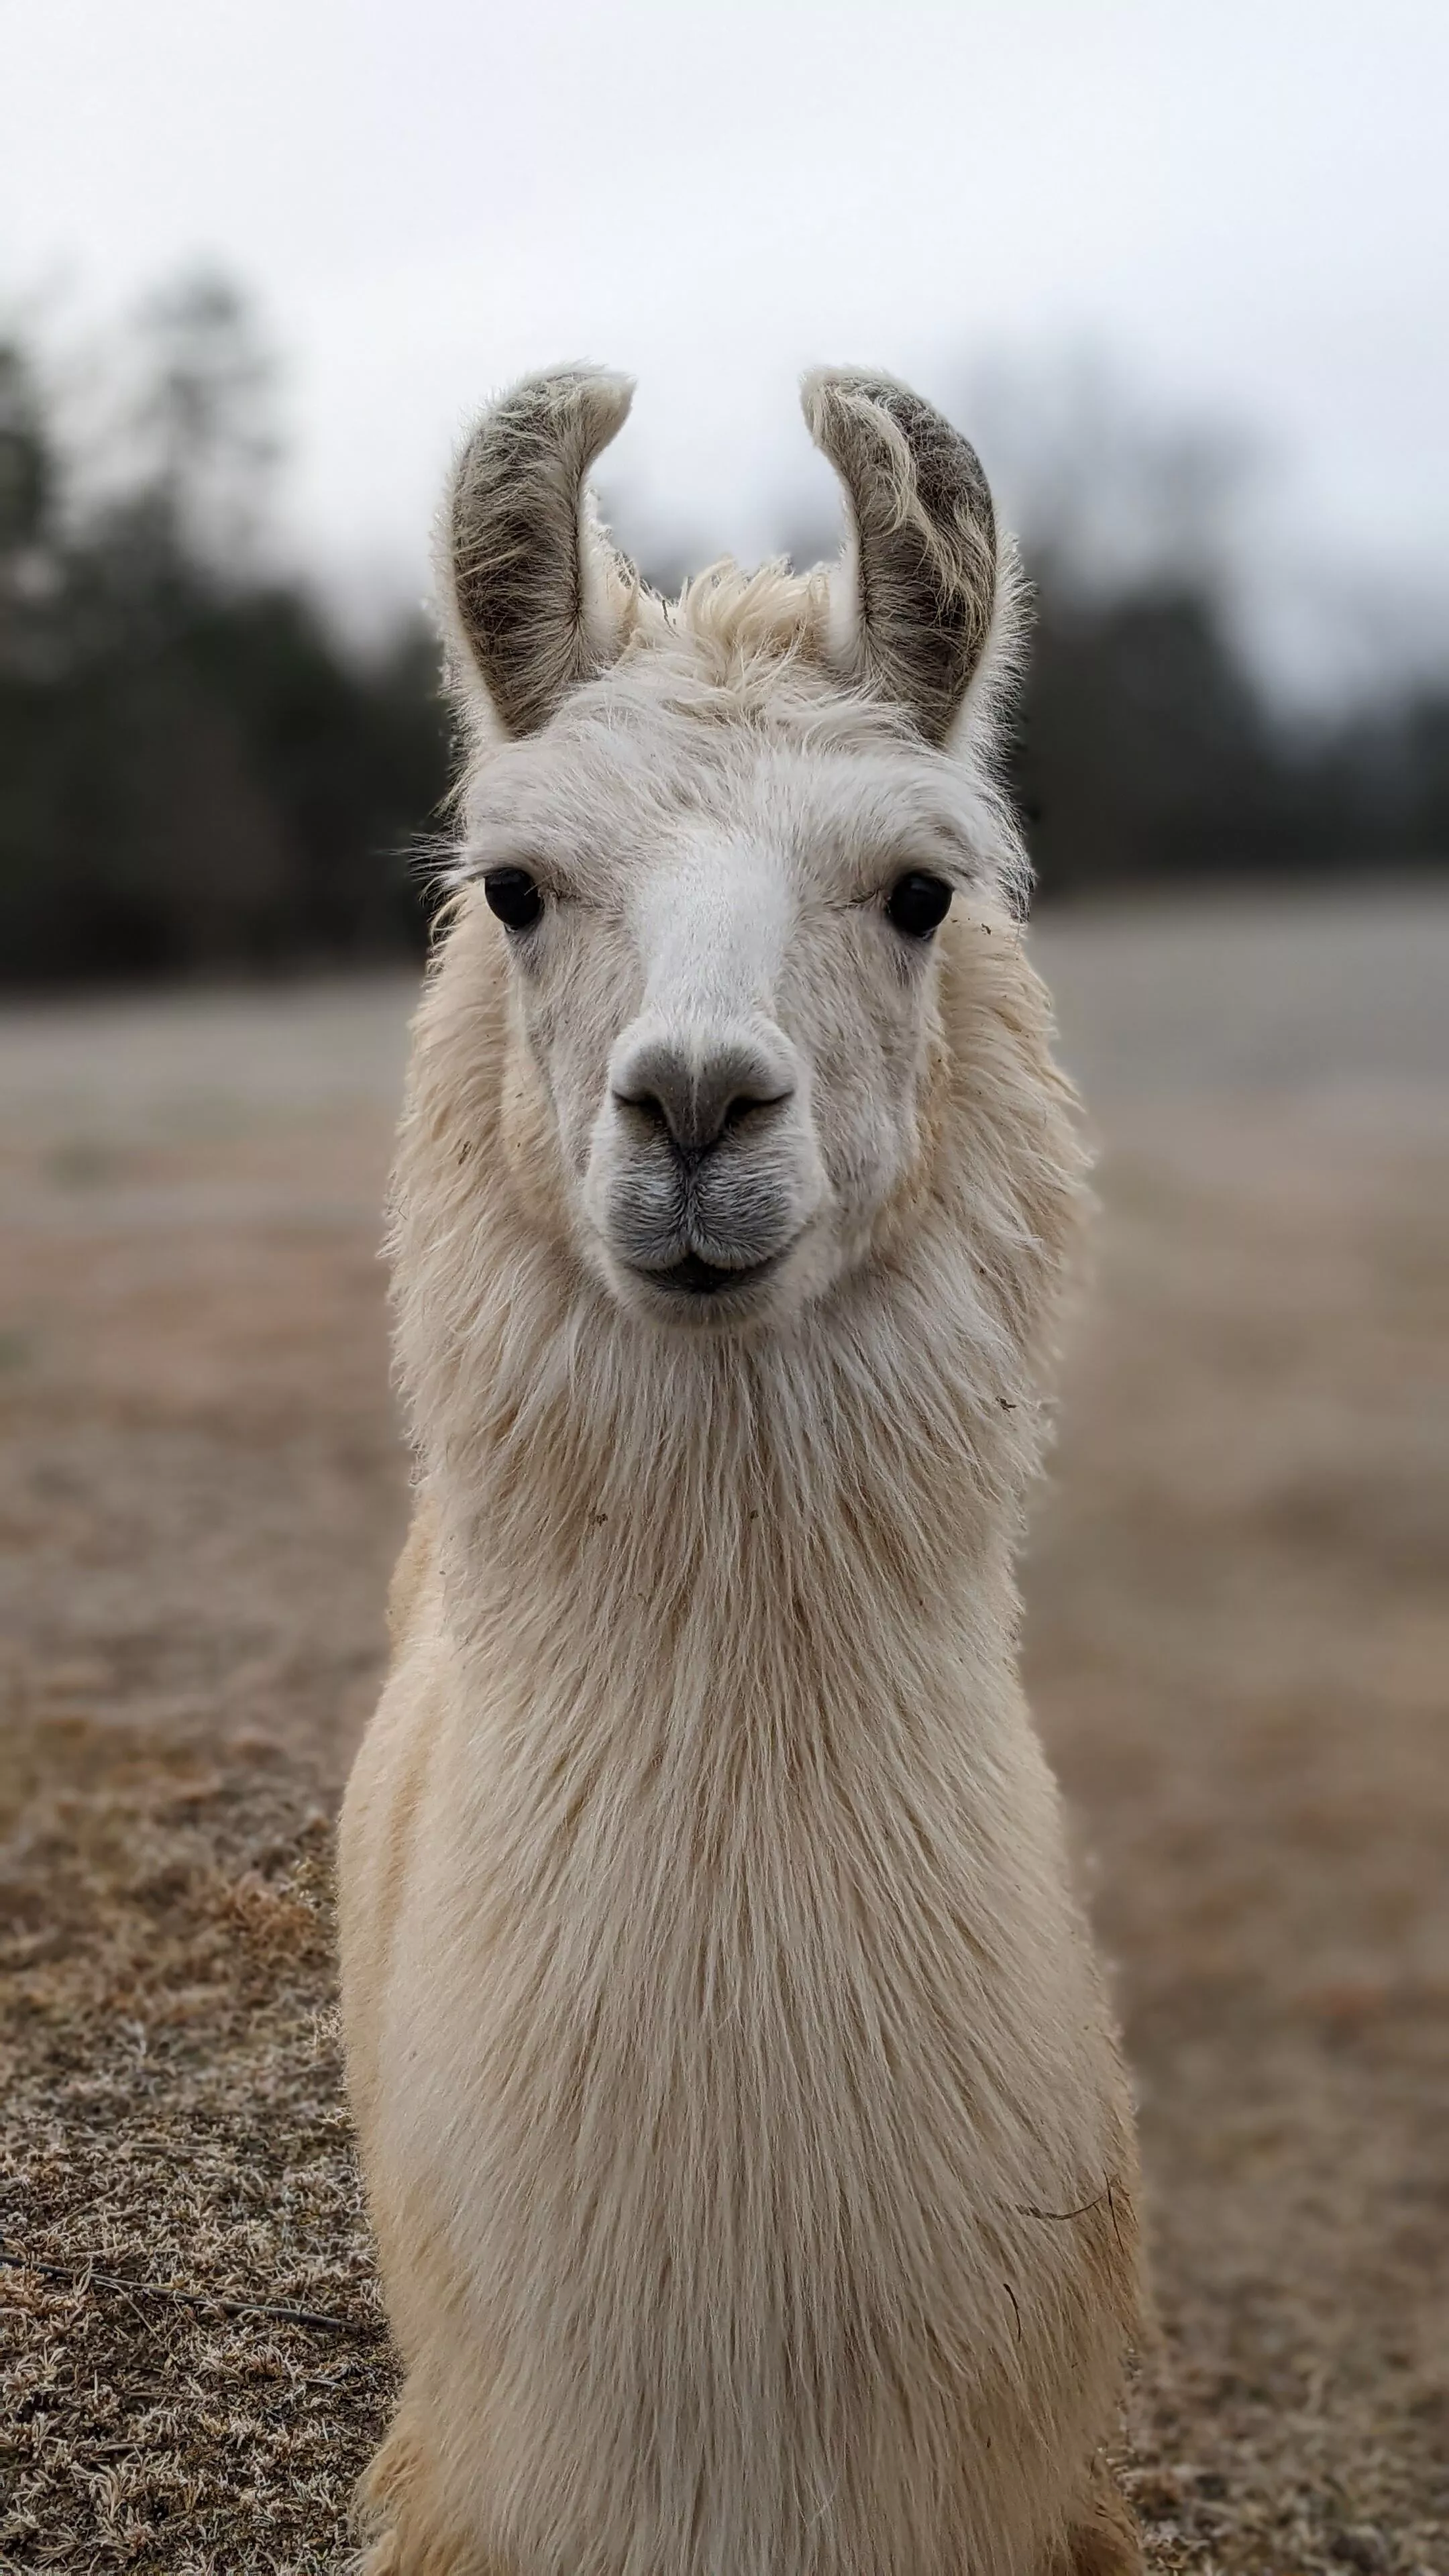 A portrait image of a llama named Thomas